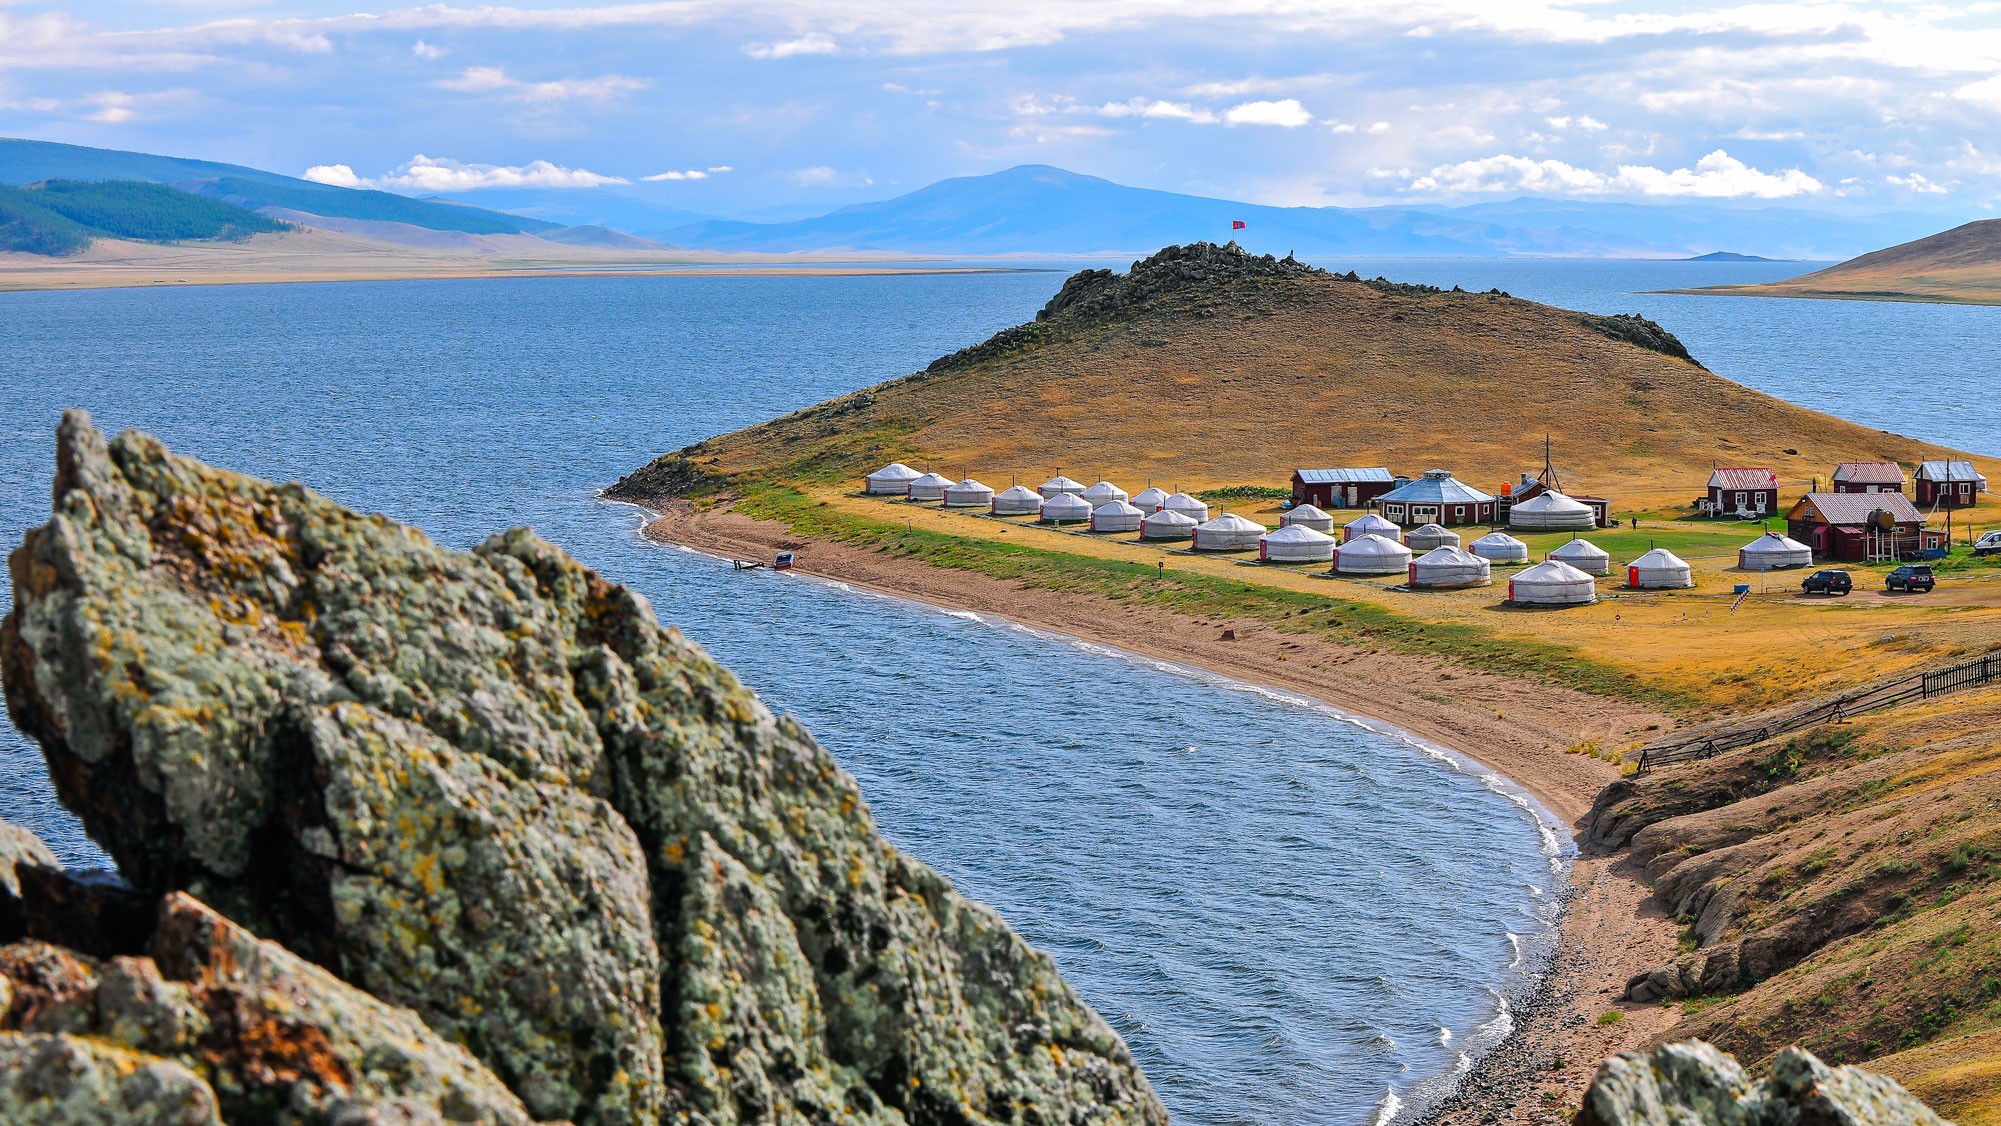 8D7N Central Mongolia and Lake Khuvsgul Tour